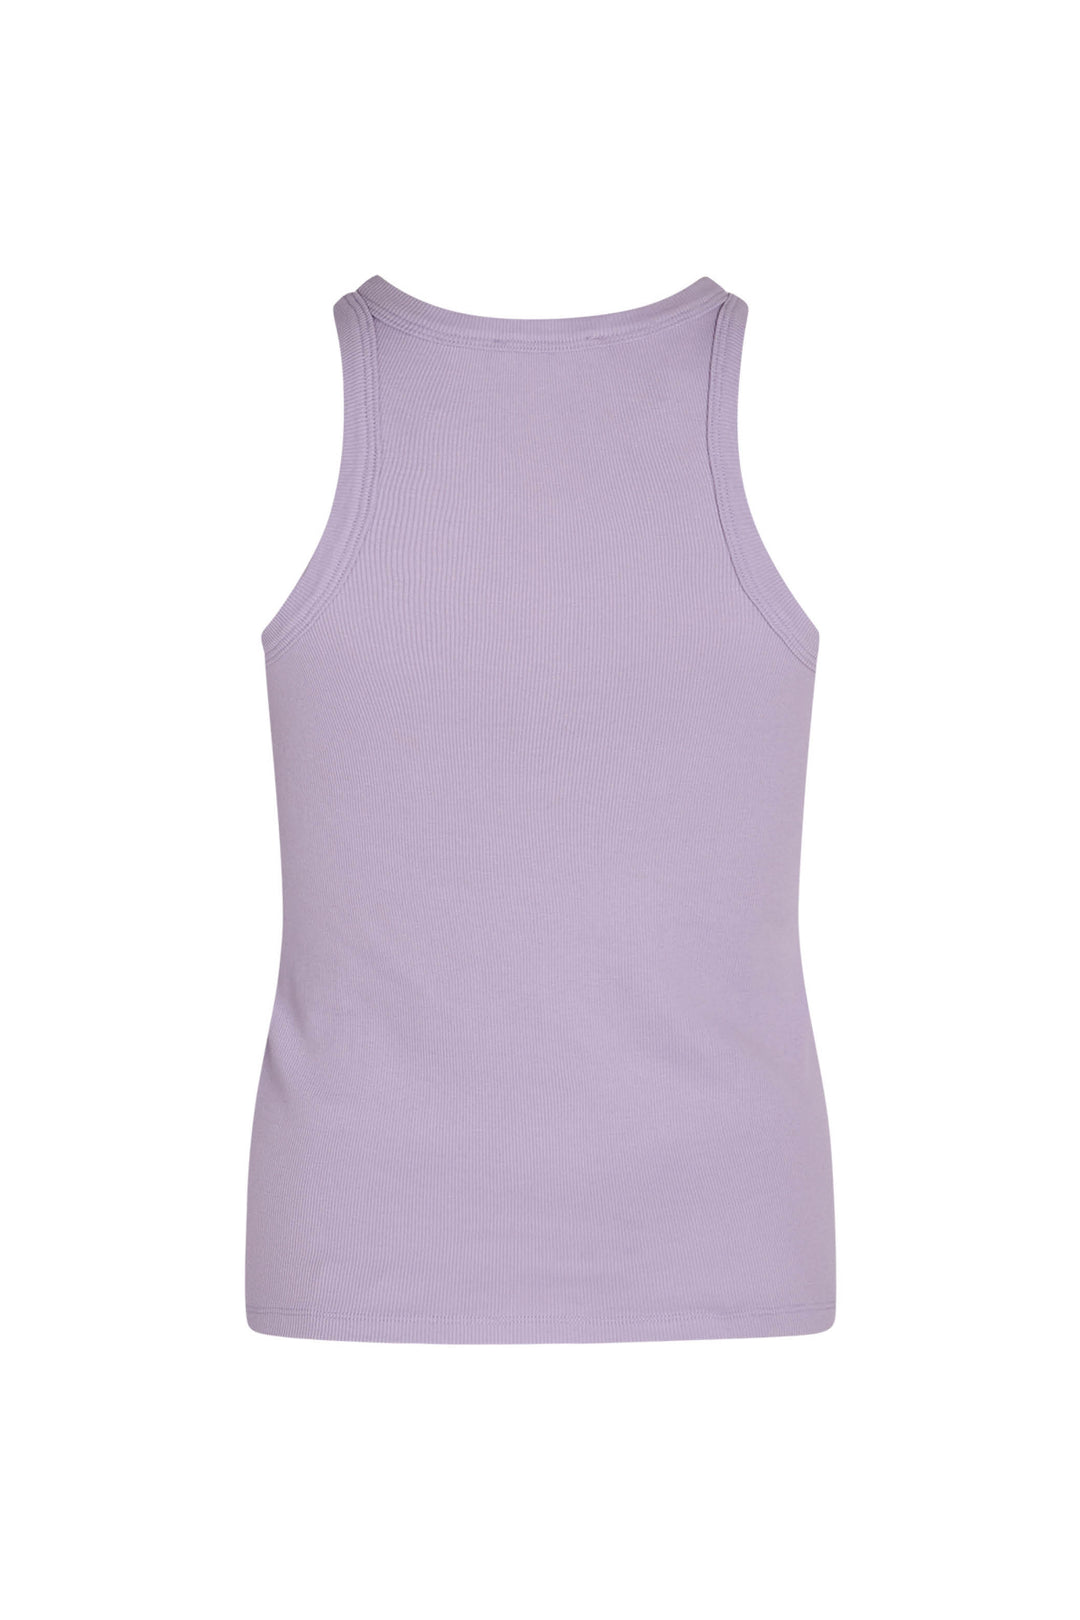 Bruuns Bazaar Women KatyBB Rib Tank top T-shirts Purple Rose